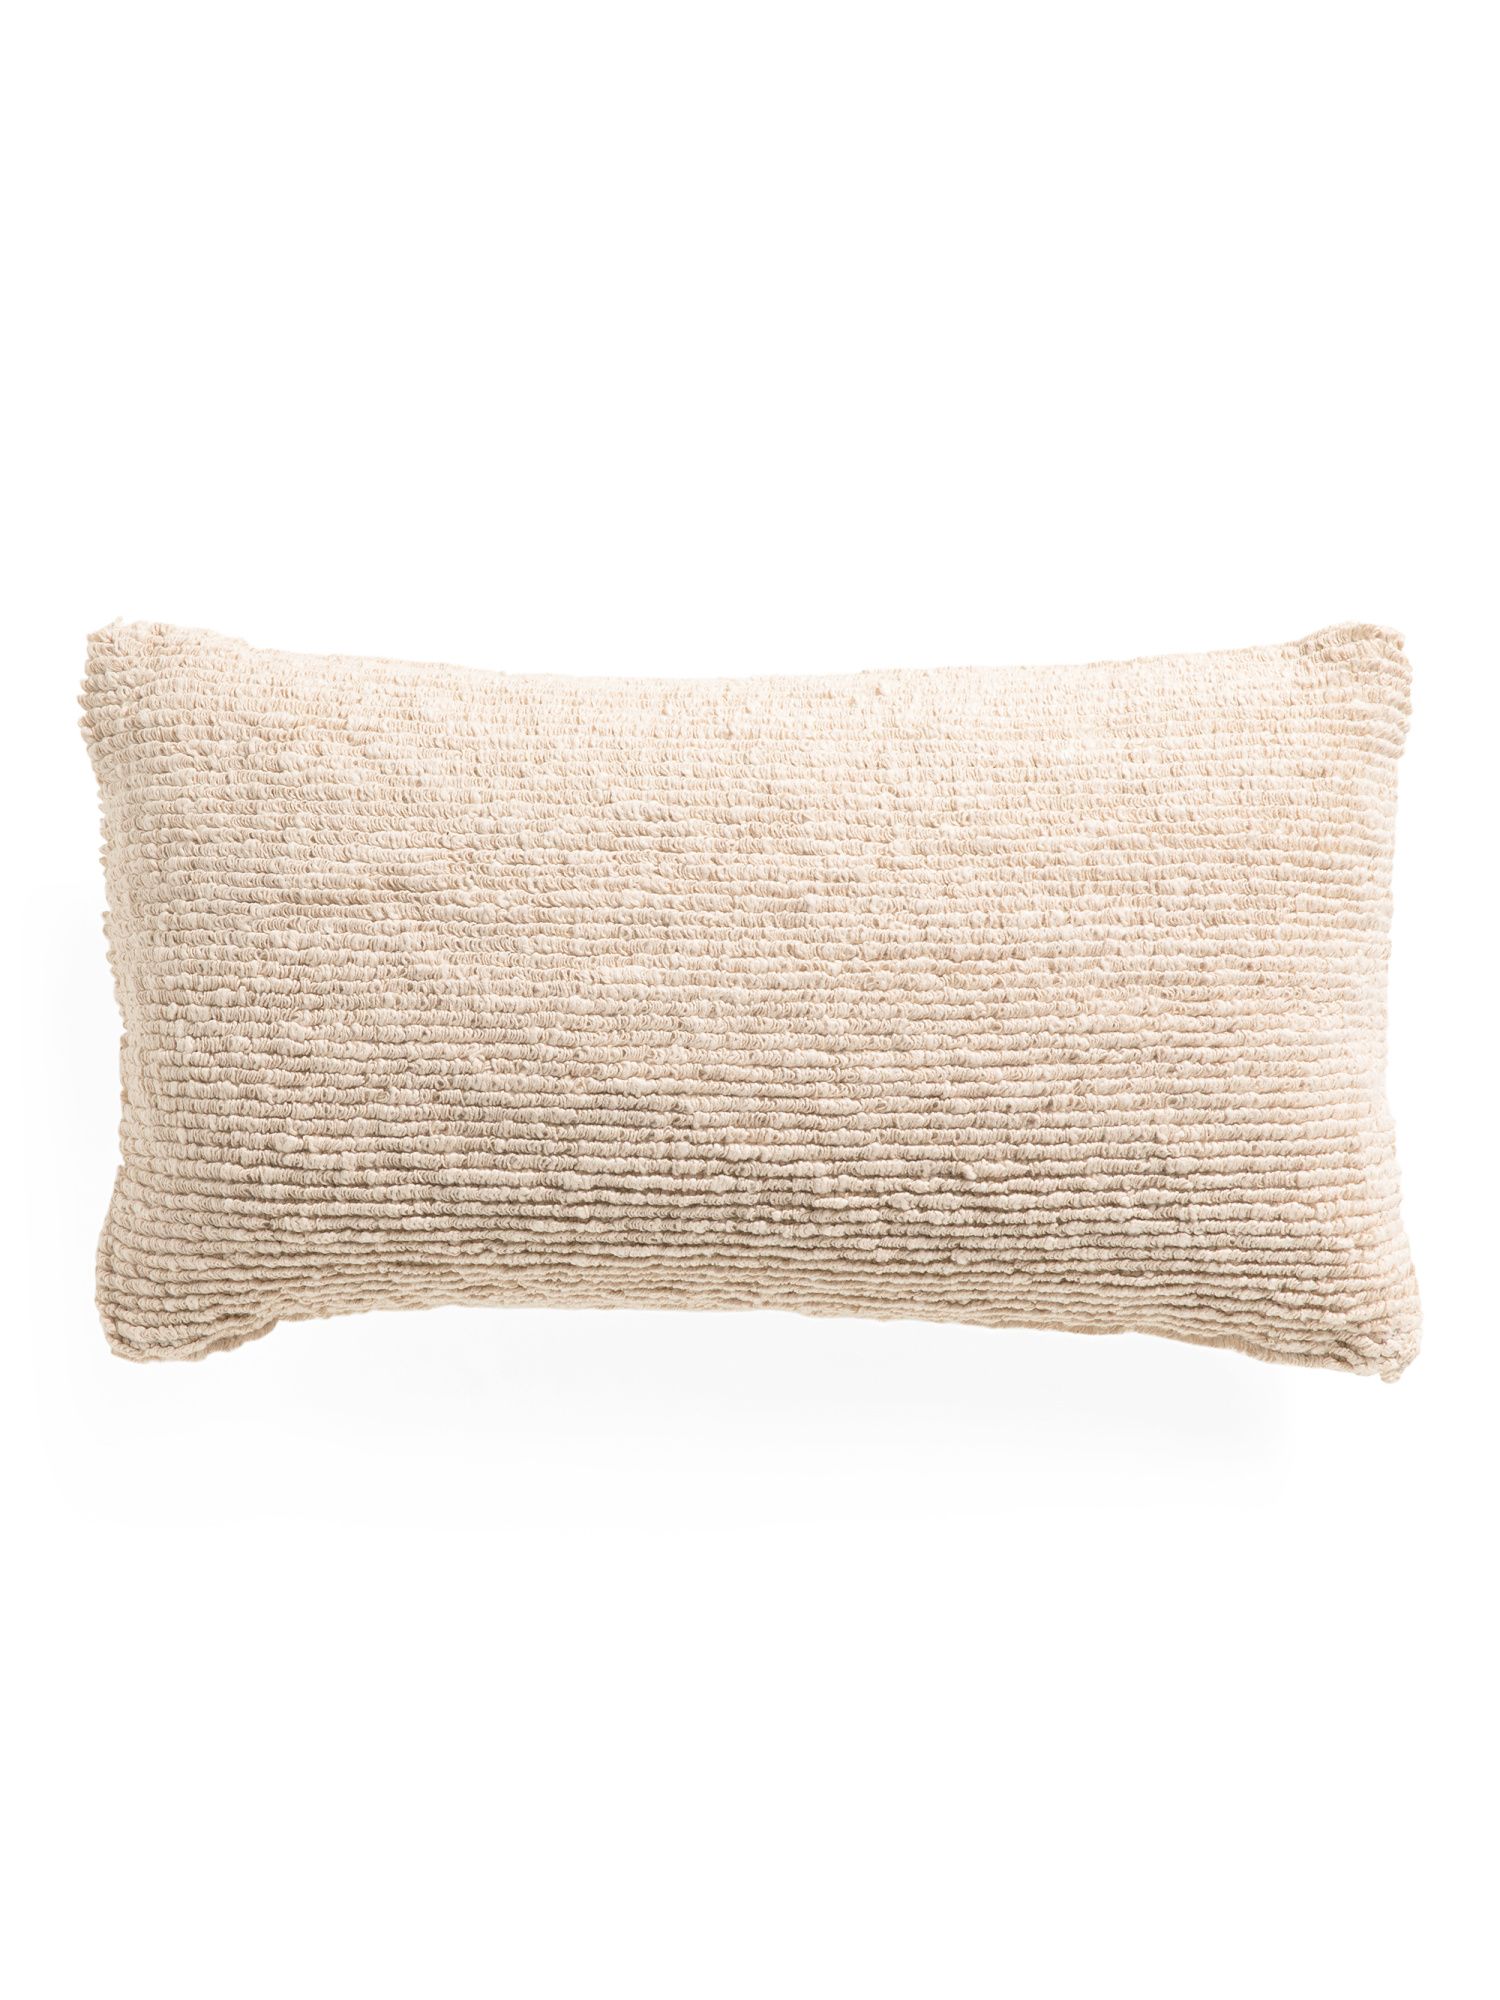 14x26 Sutton Decorative Pillow | TJ Maxx